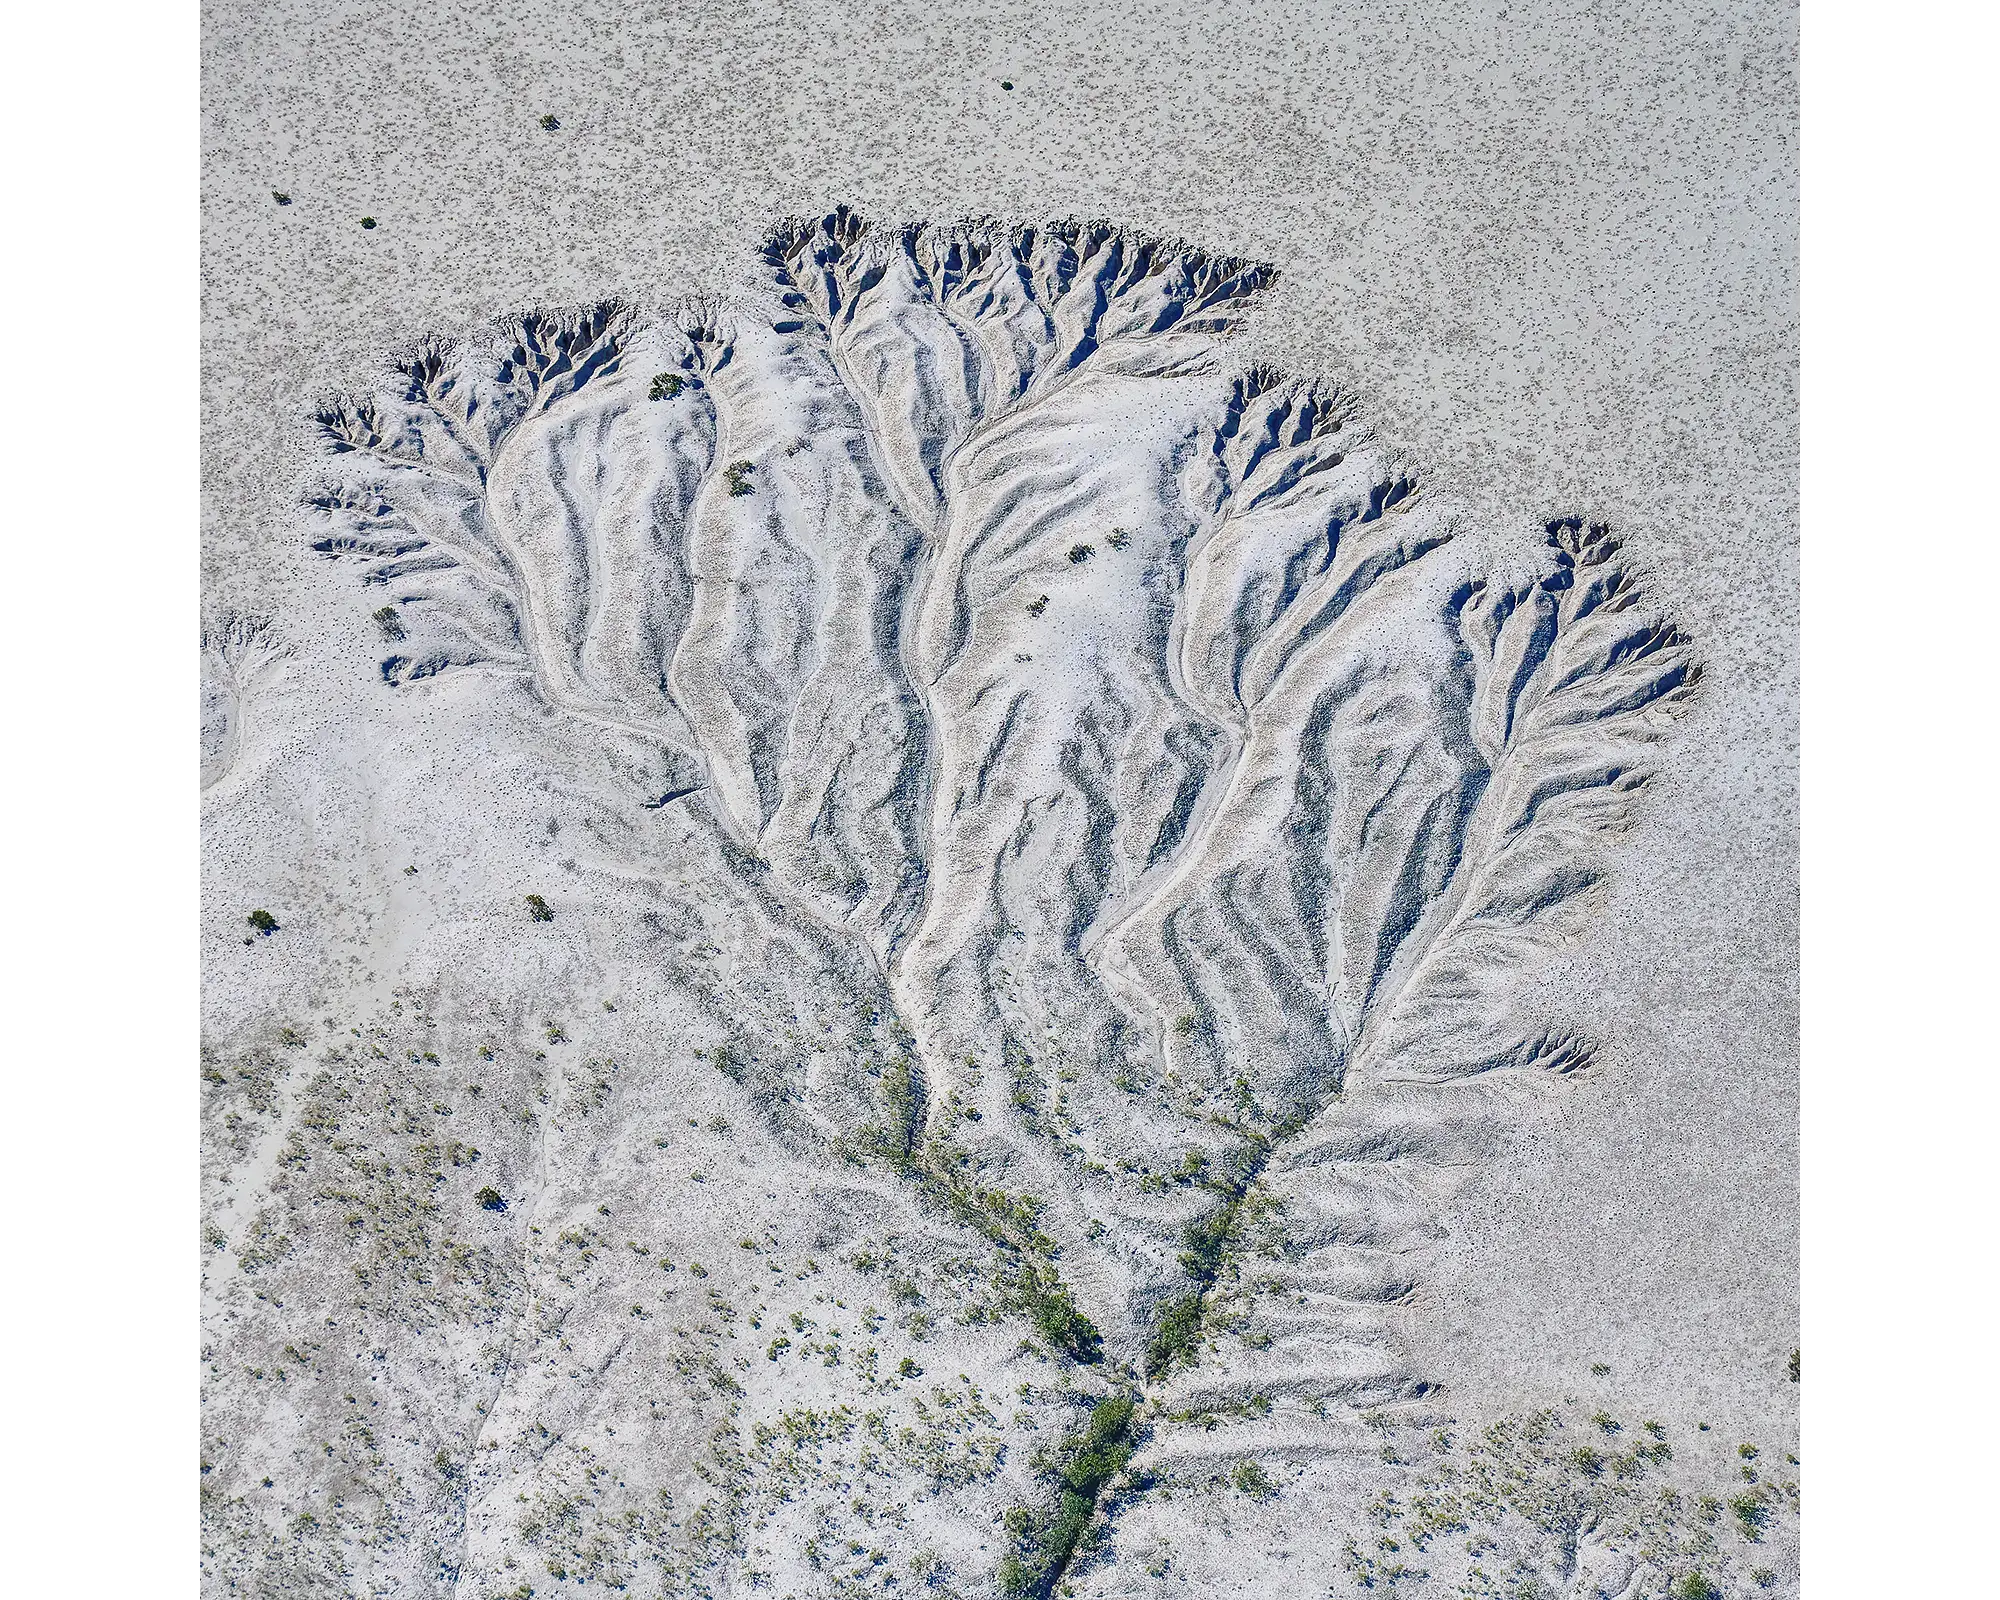 Tidal patterns in sand, Willie Creek, Kimberley, Western Australia.